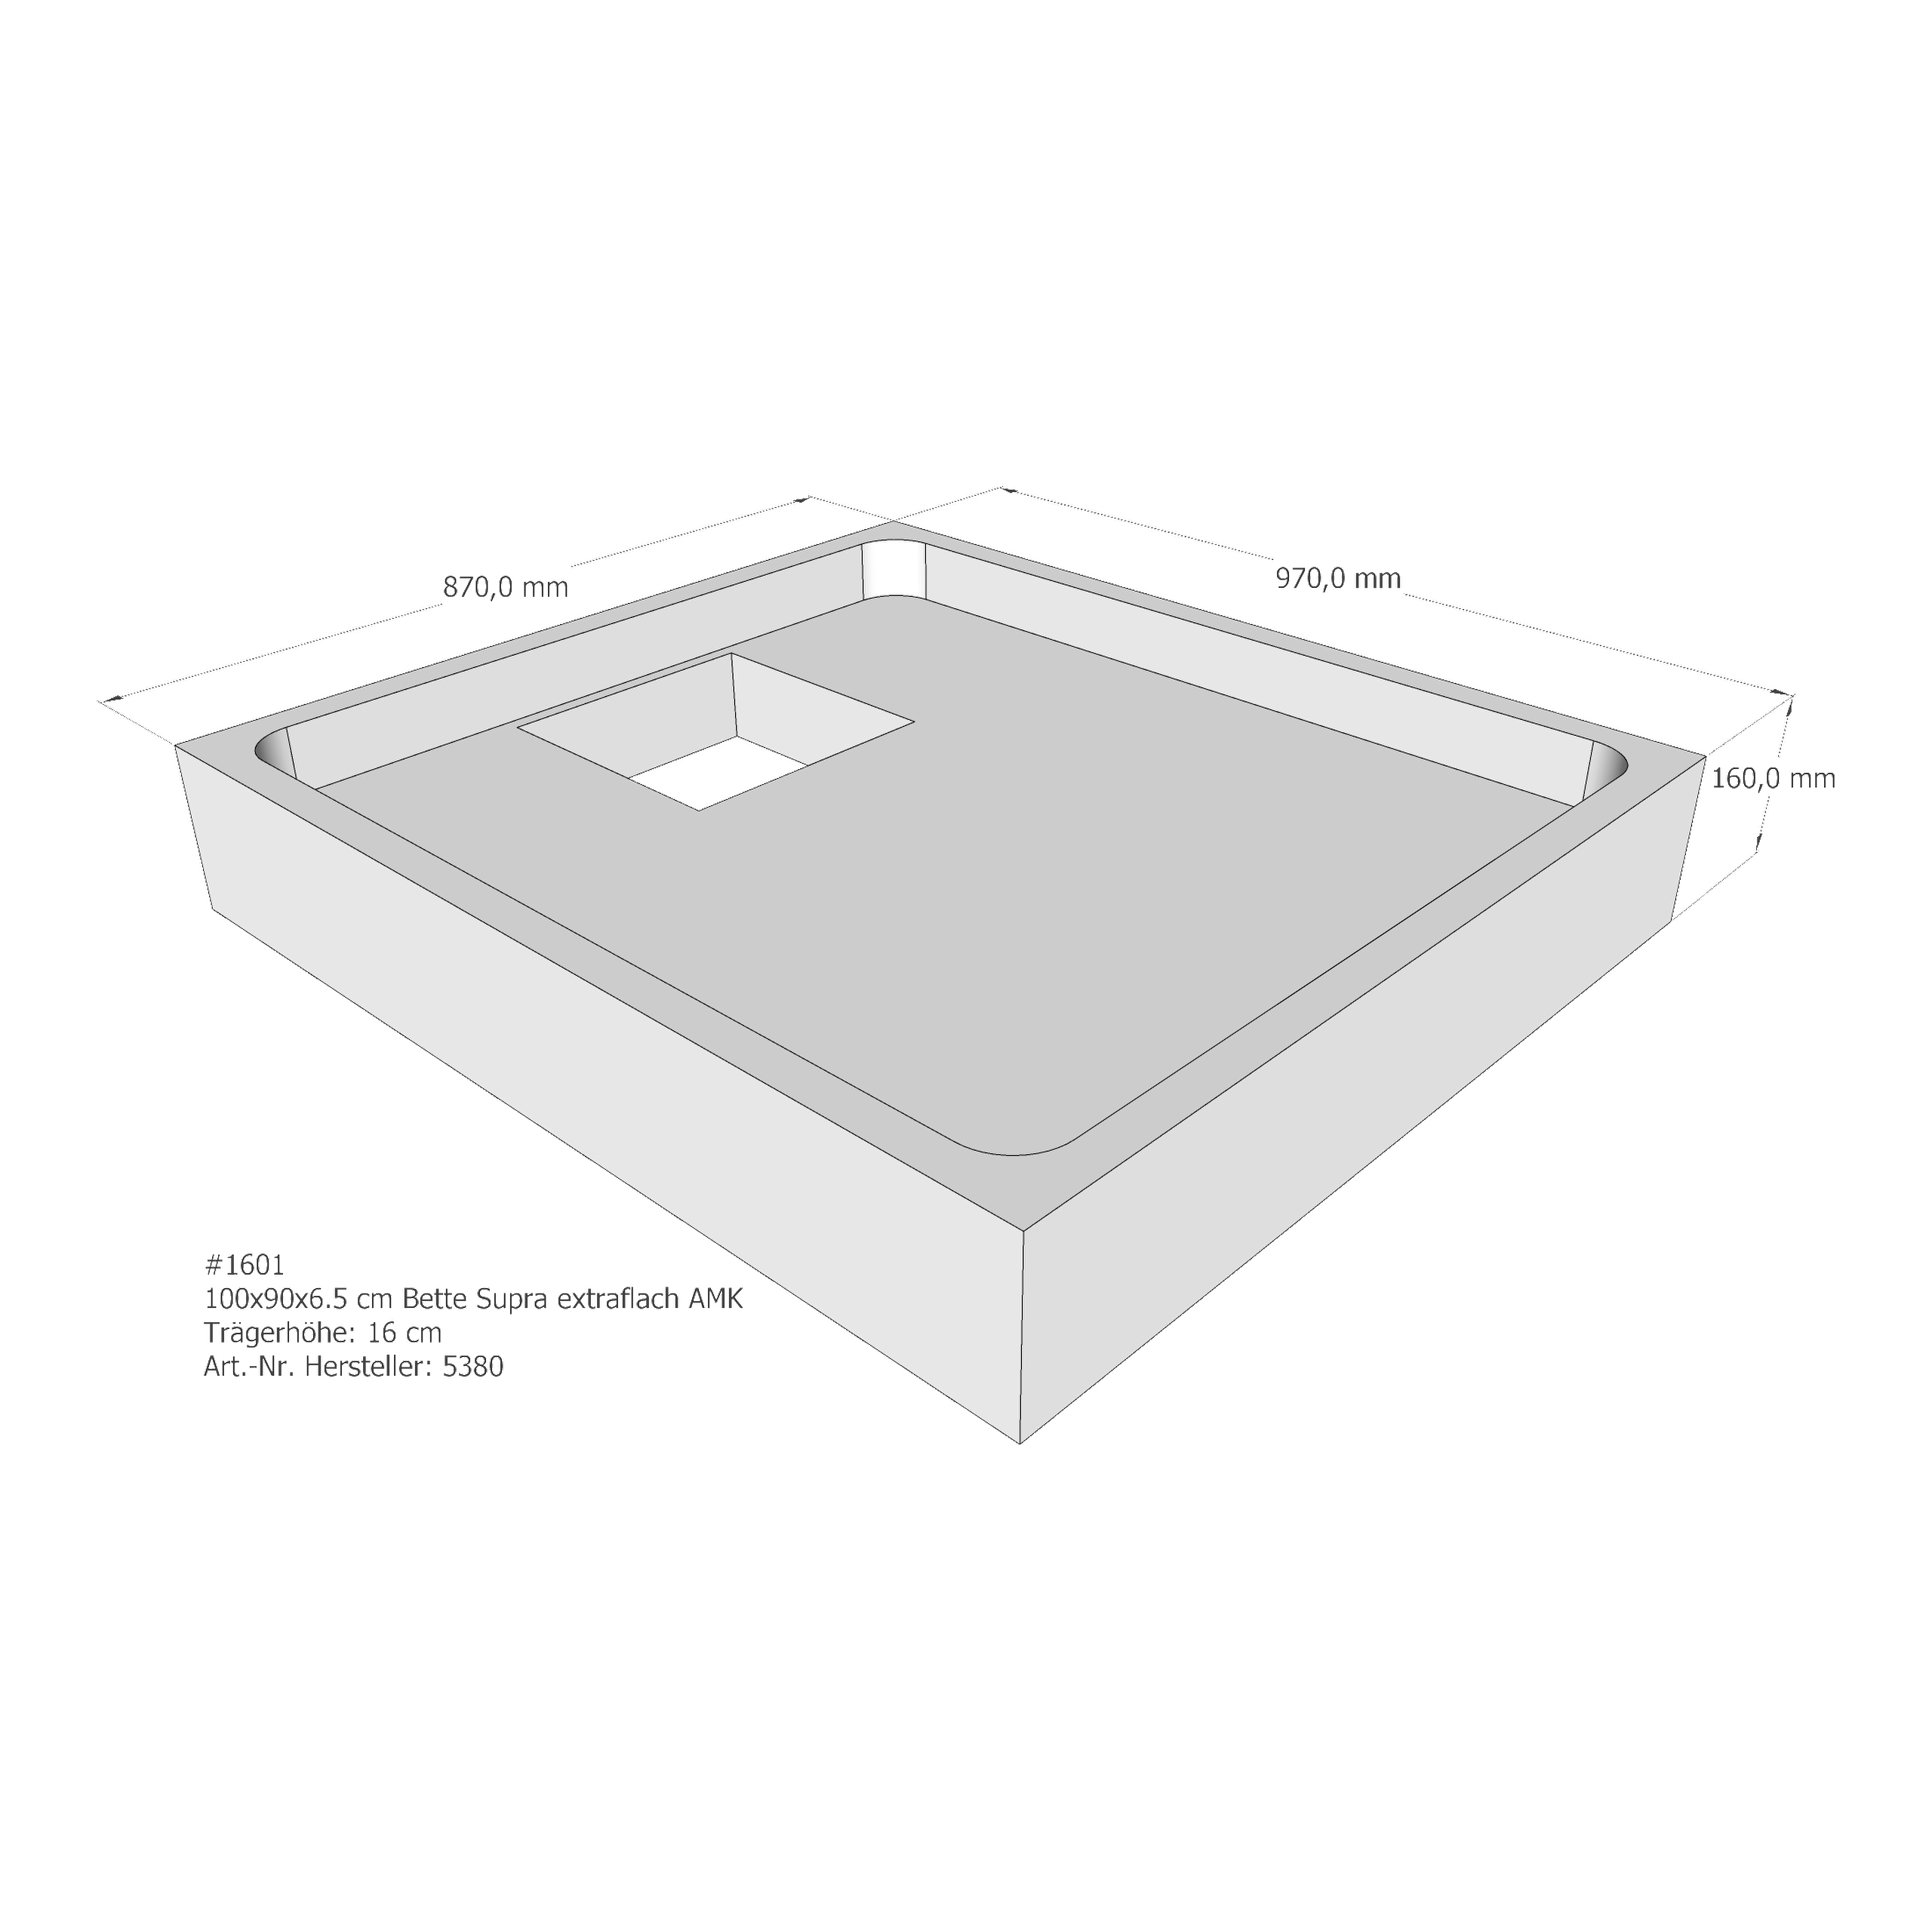 Duschwannenträger Bette BetteSupra (extraflach) 100x90x6,5 cm AMK210